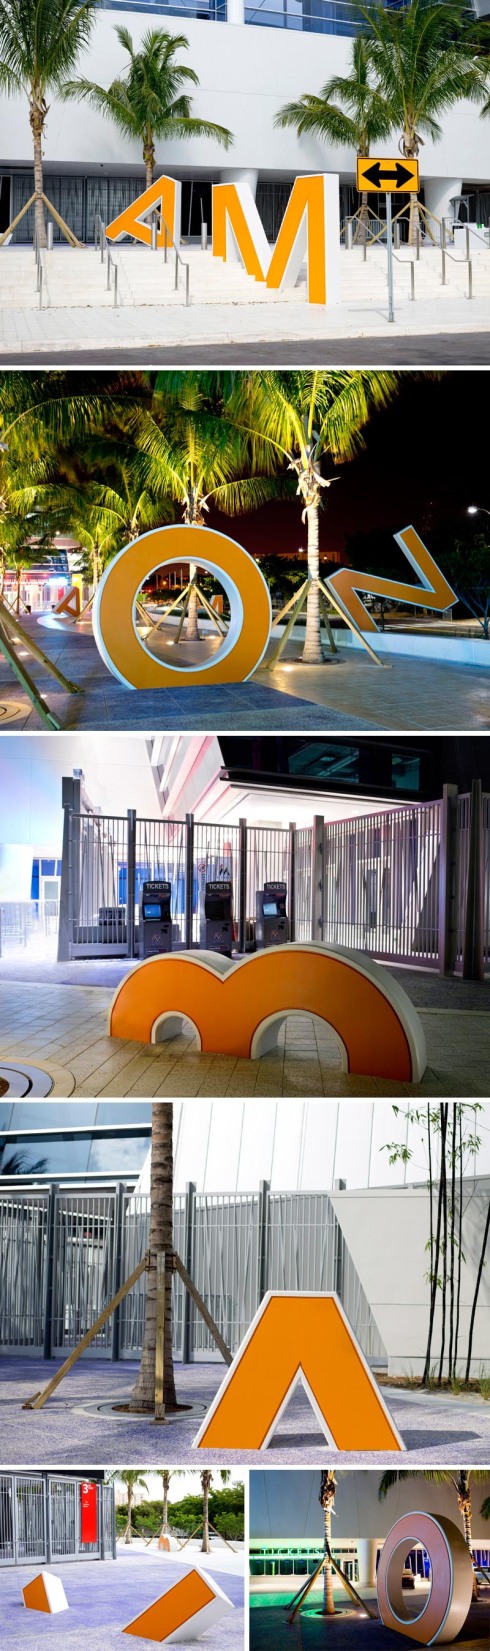 Typographic Installation, Typography as sculpture, Orange Bowl Type as memorial, Miami, Snarkitecture